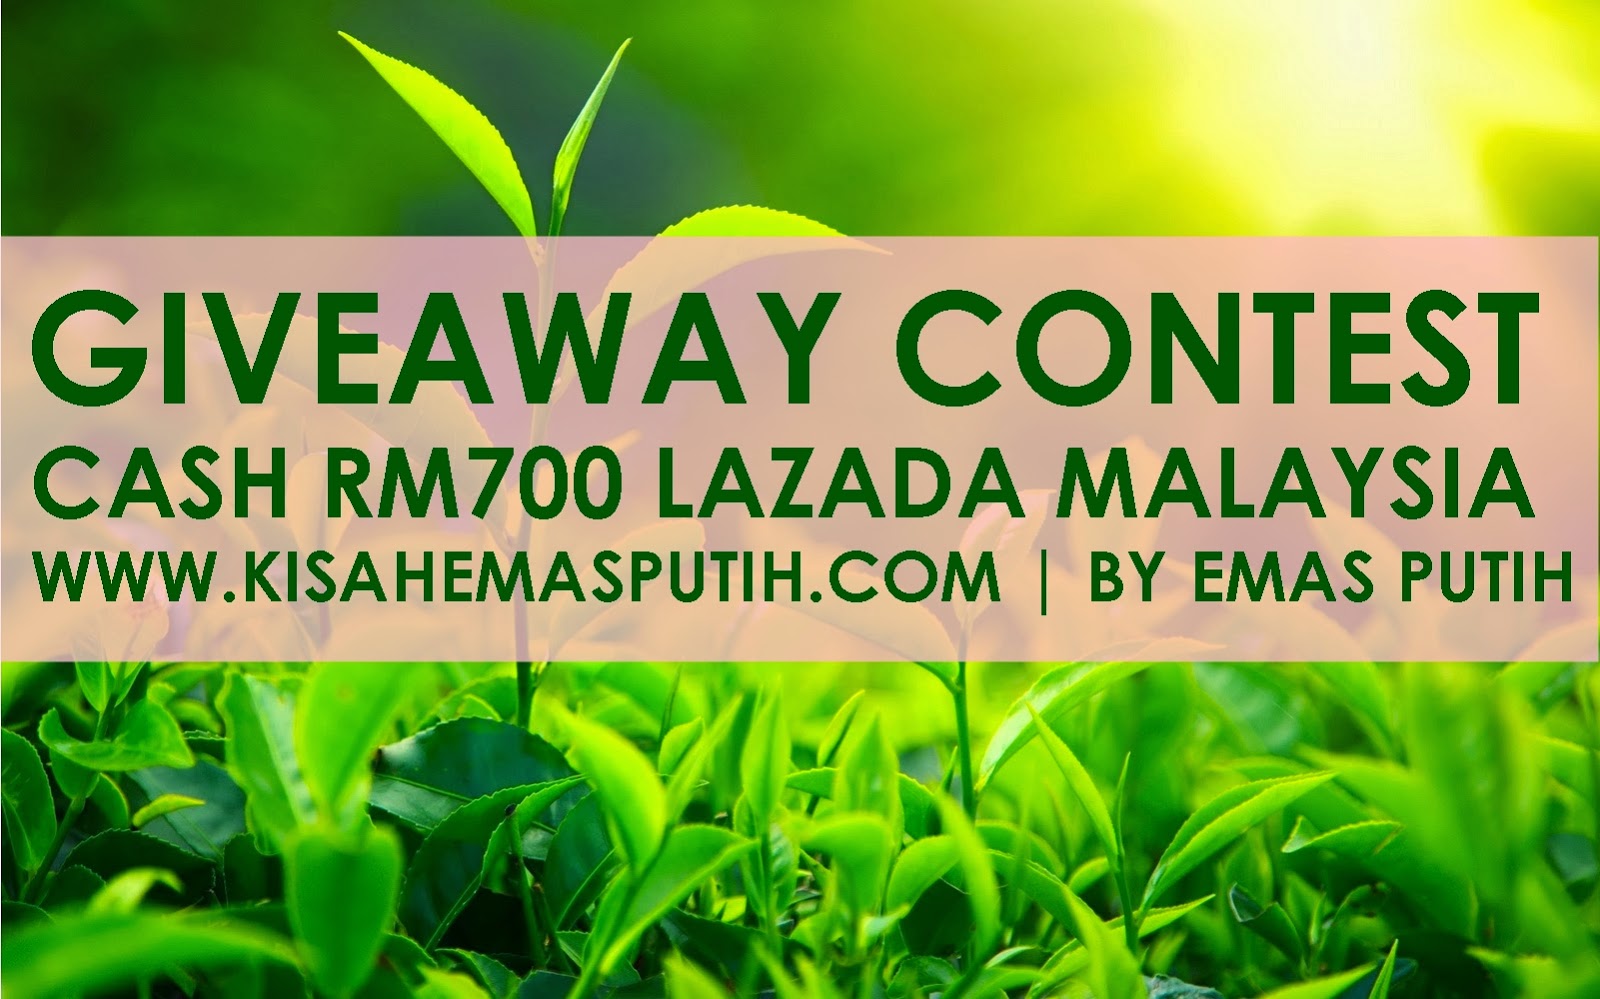 http://www.kisahemasputih.com/2014/10/giveaway-contest-rm700-jualan-hebat.html